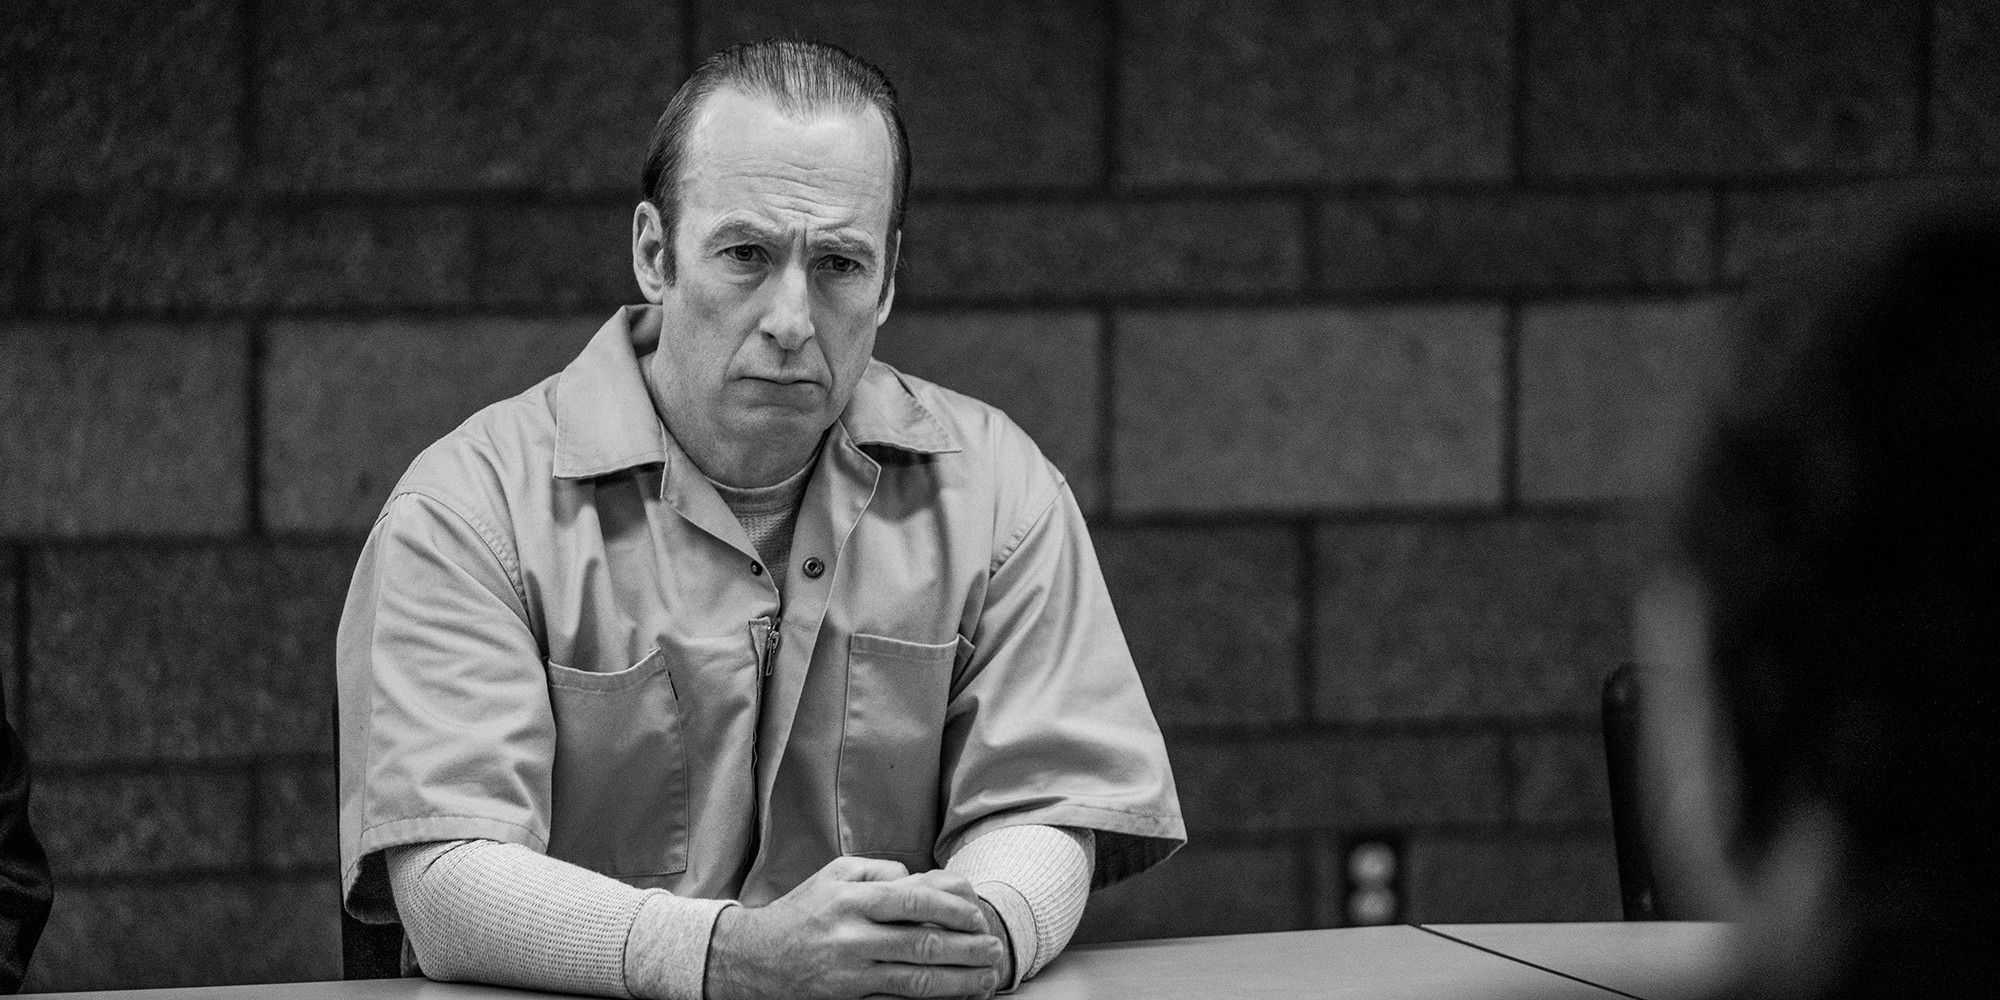 Bob Odenkirk as Jimmy McGill in prison attire in Better Call Saul